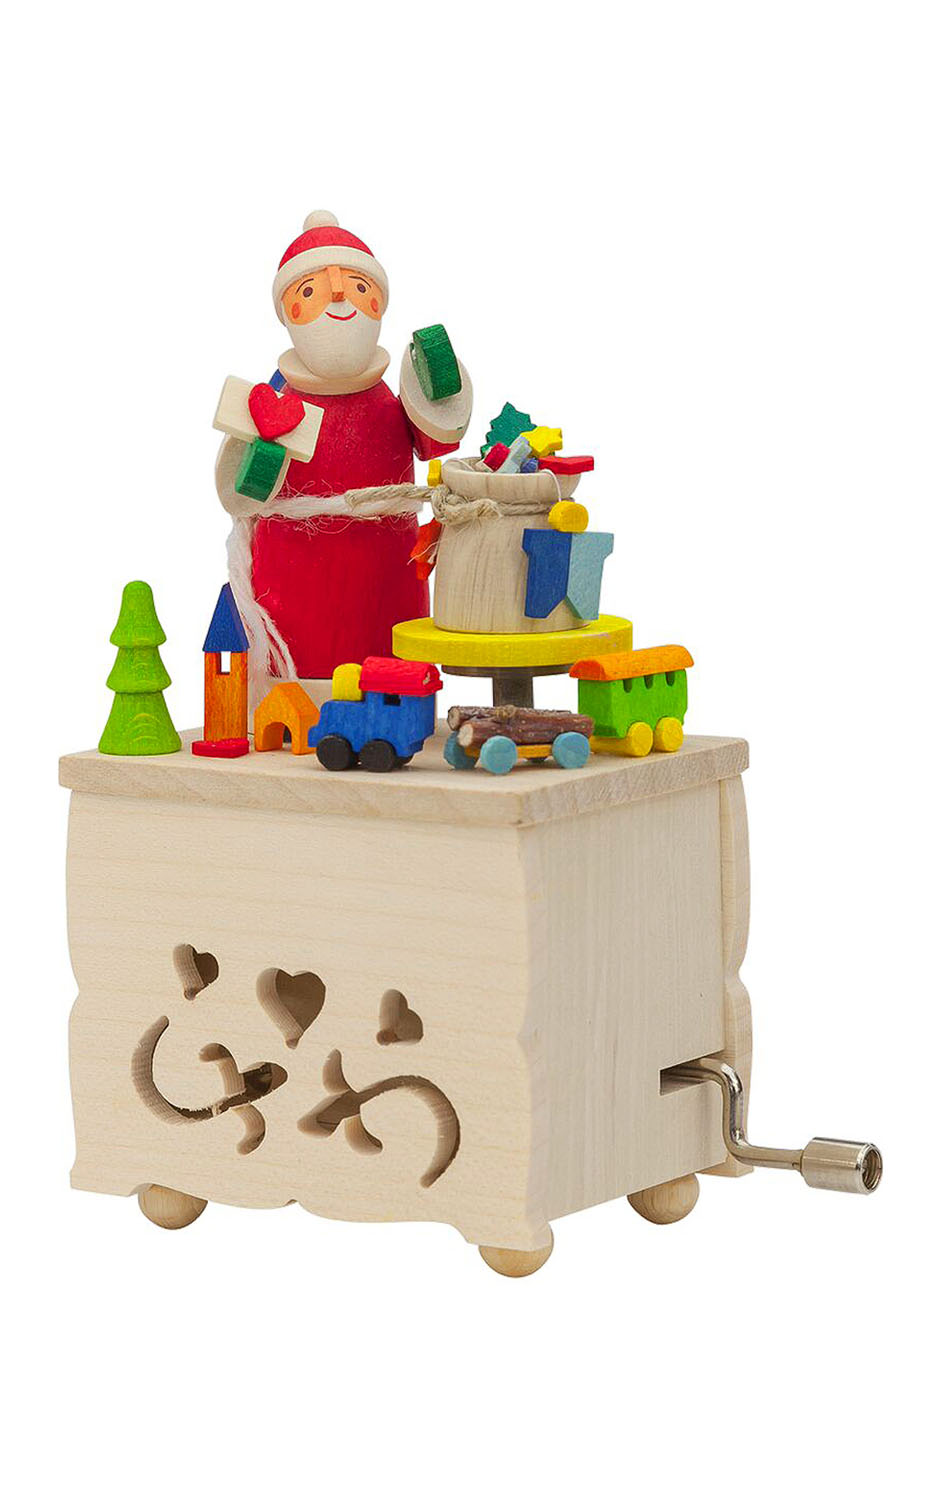 150 - Graupner Music Box - Santa with Toys - Handcrank - 4.75"H x 2.75"W x 2"D